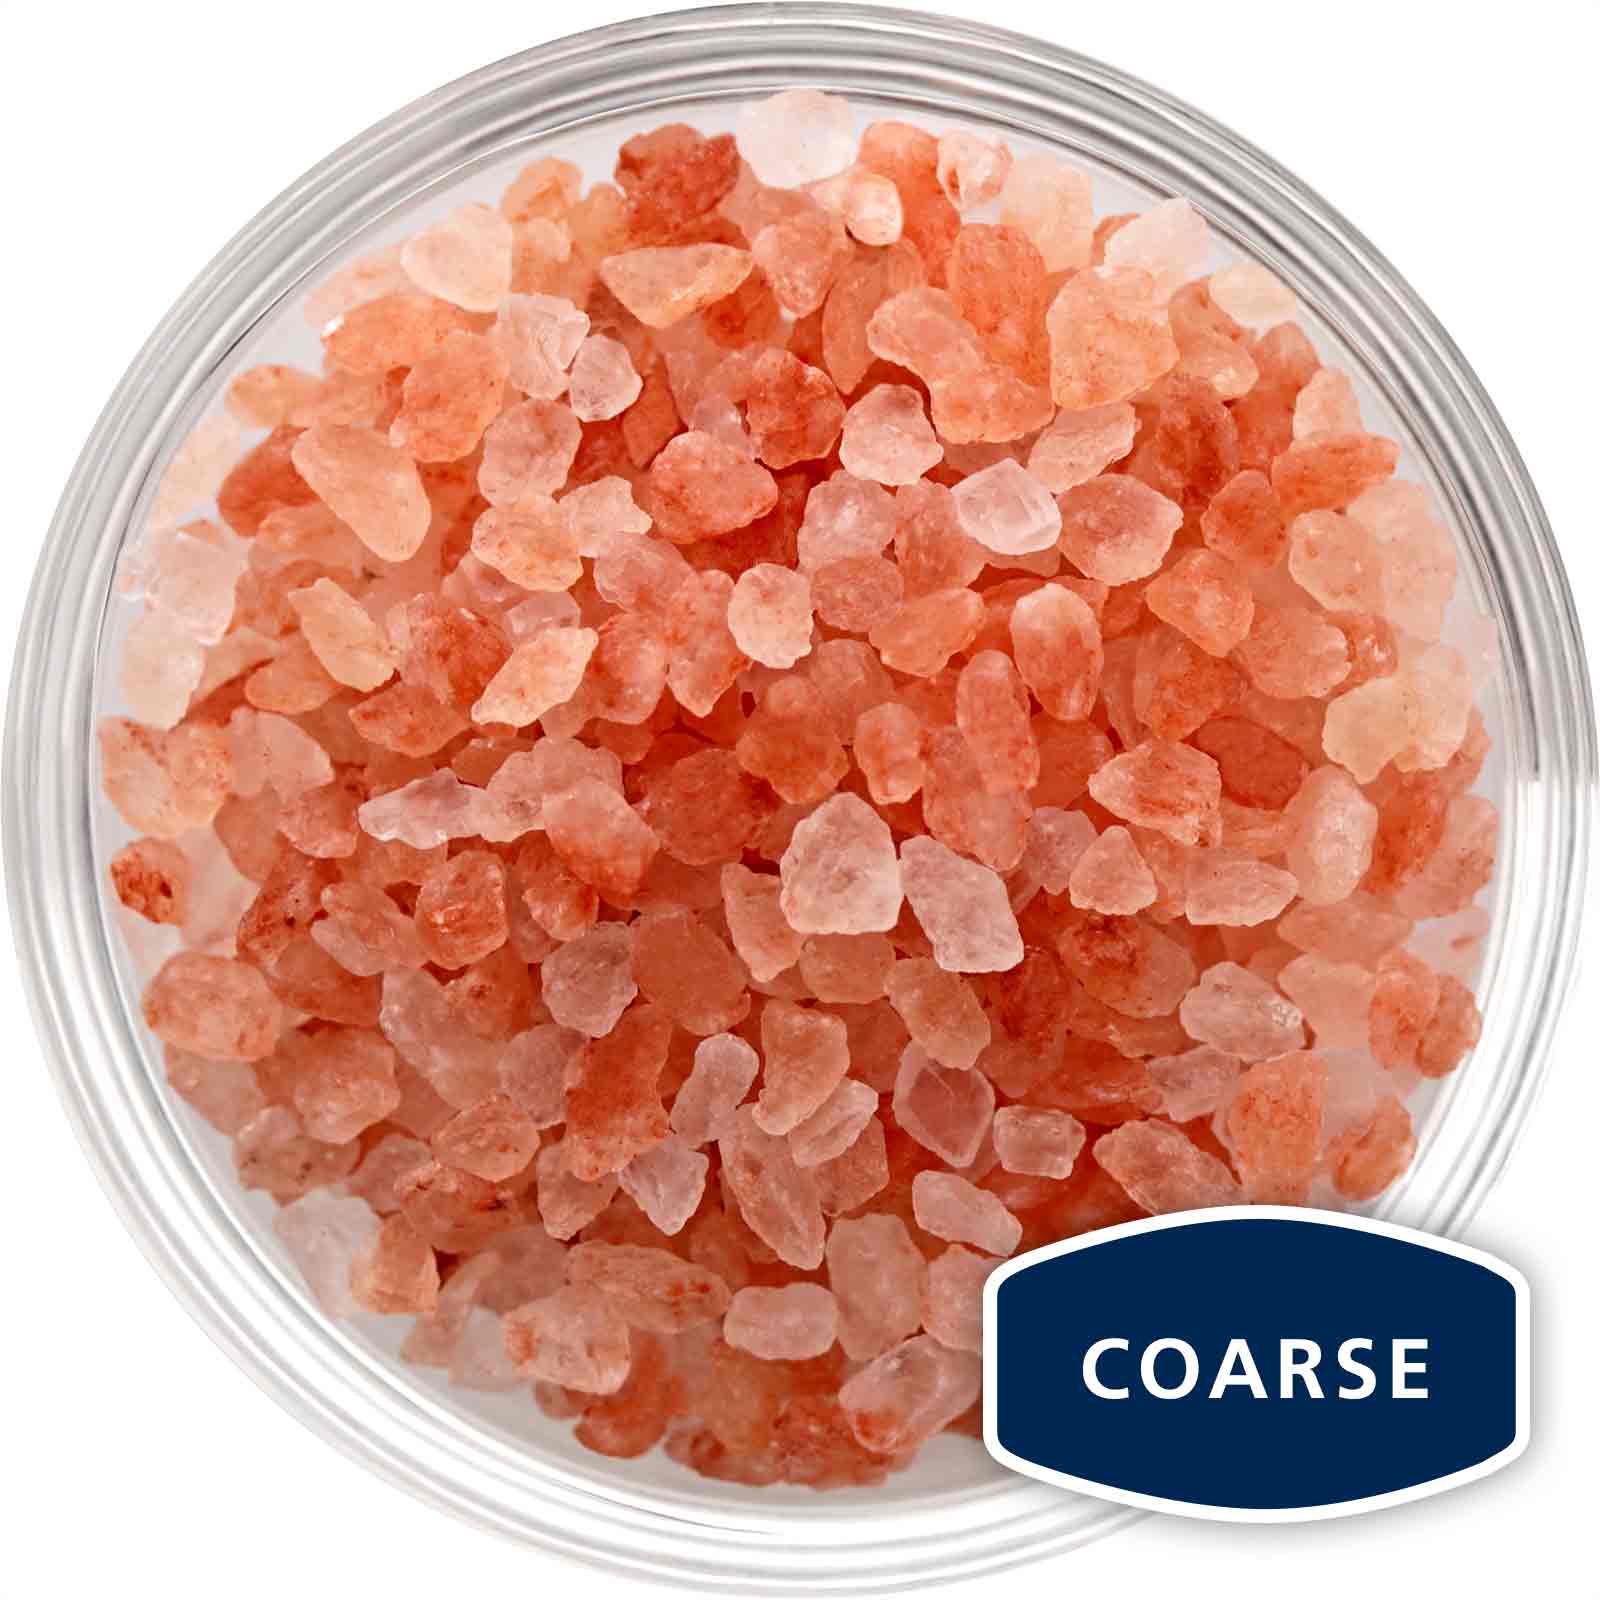 Bowl of coarse grain size Himalayan pink salt